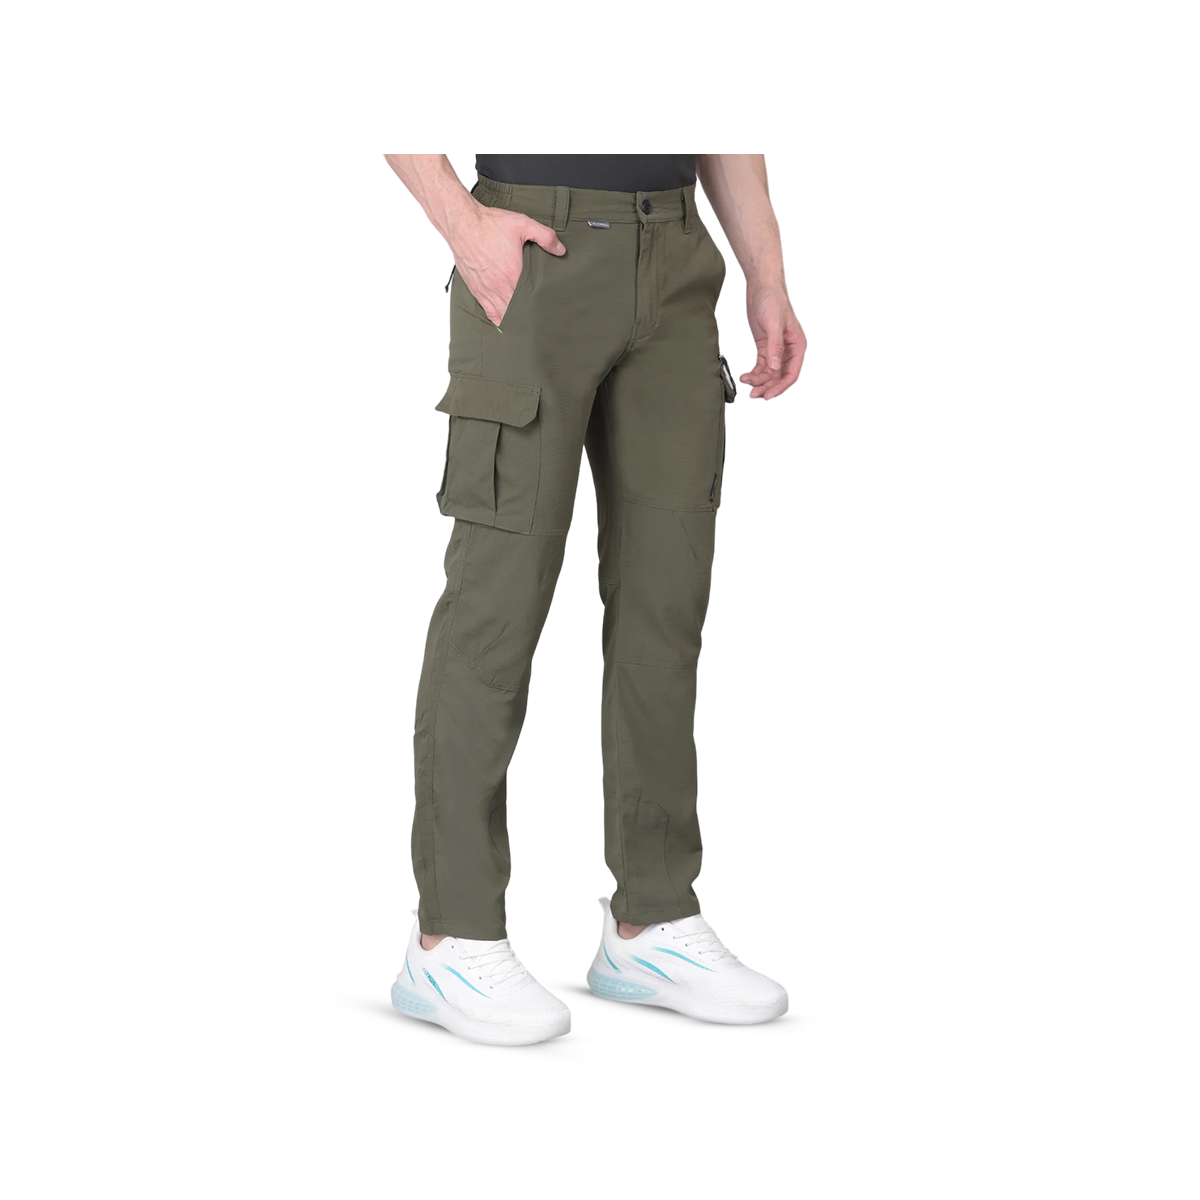 QUADRA Olive Trouser for Stylish Comfort on the Go - Medium